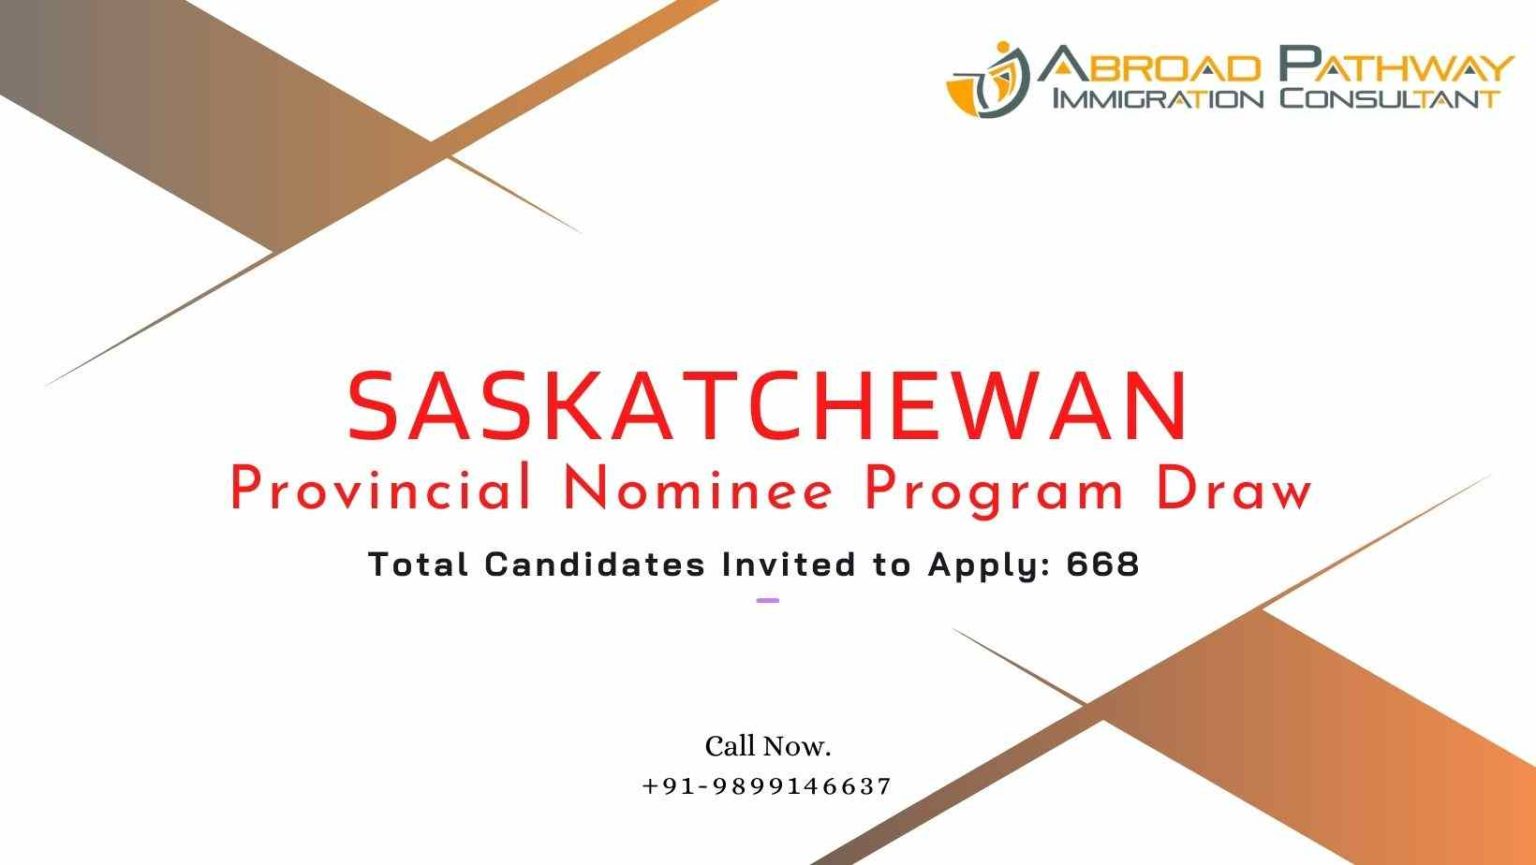 Saskatchewan Draw- SINP latest draws round of invitations